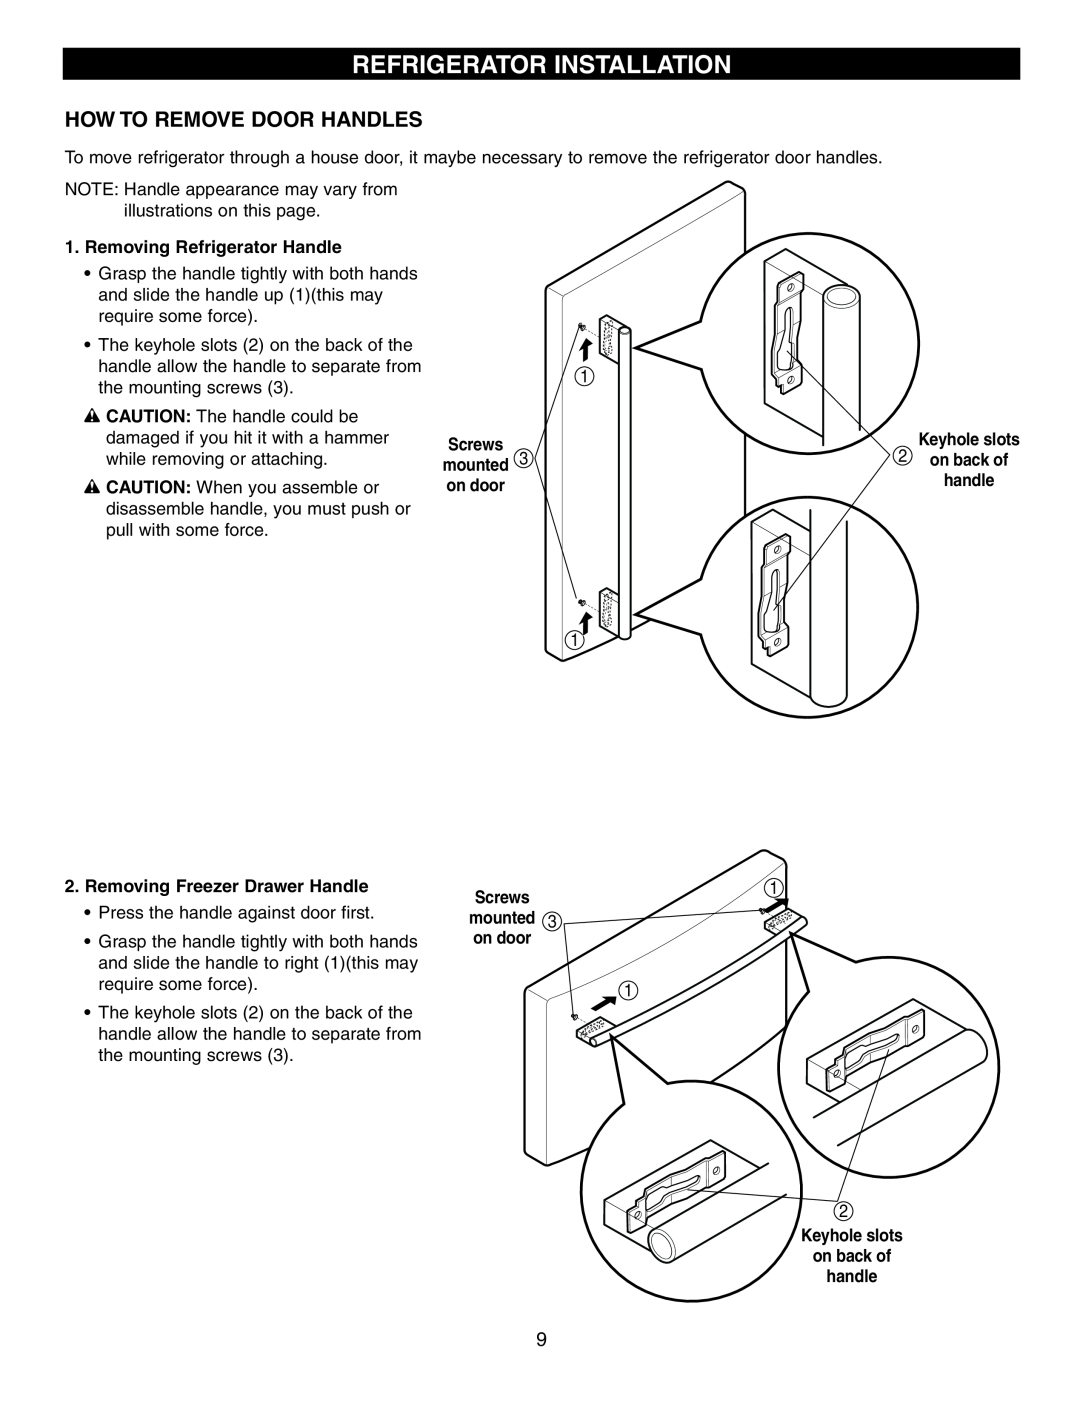 LG Electronics LRFD21855 manual Refrigerator Installation, How To Remove Door Handles, Removing Refrigerator Handle, Screws 